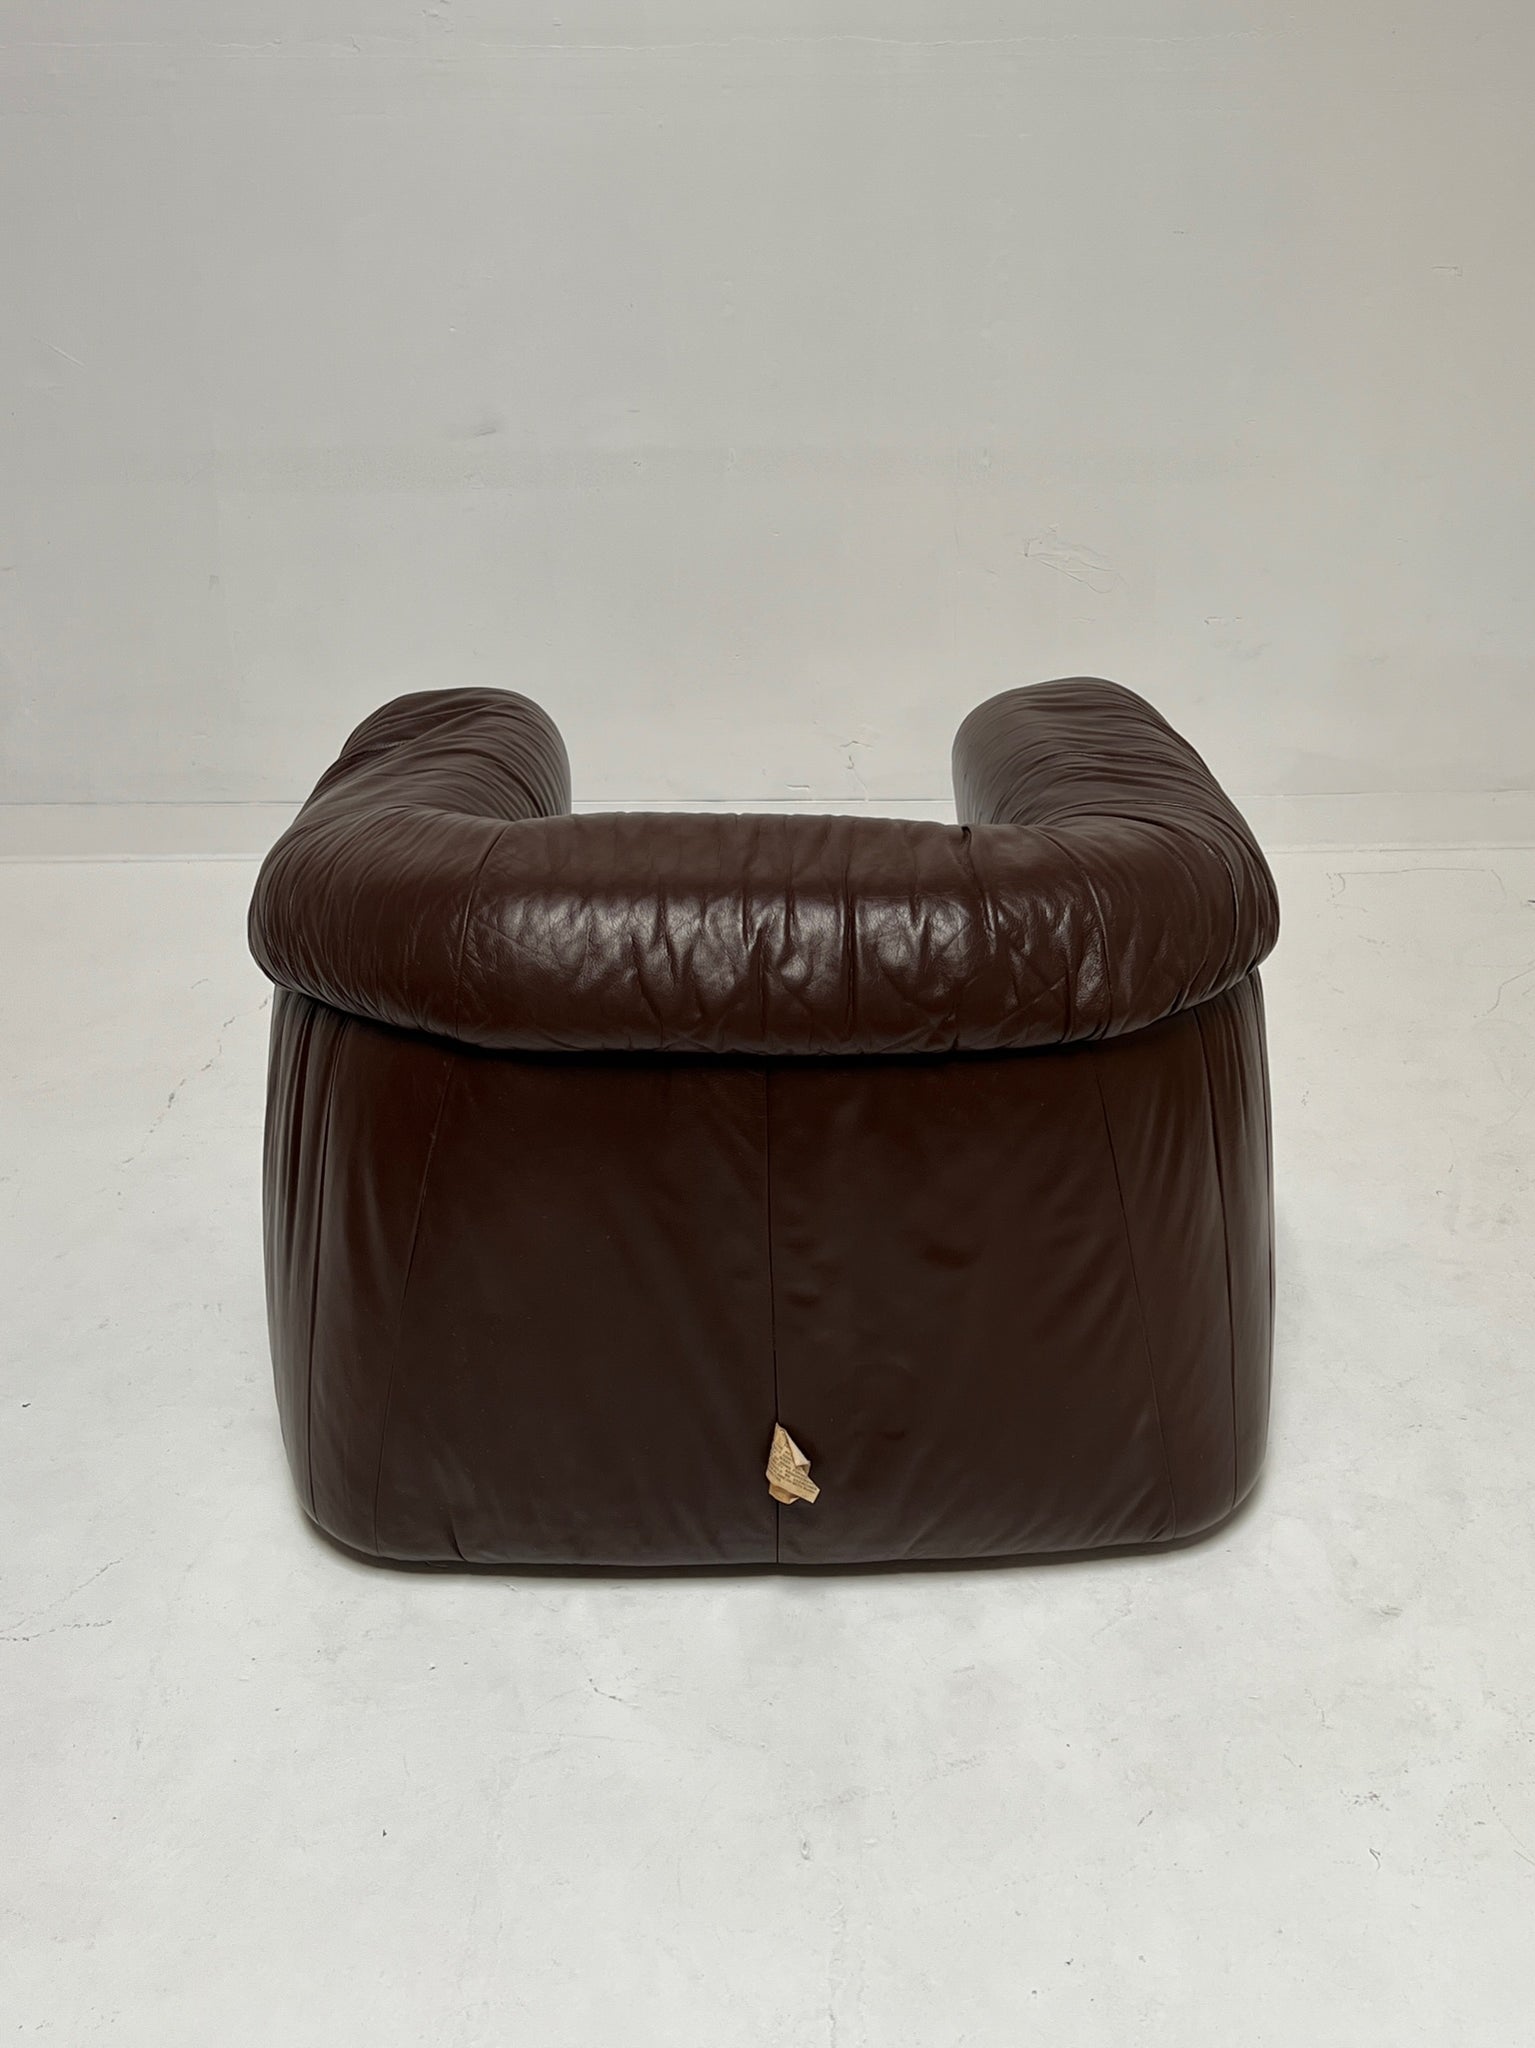 Italian Brown Leather Lounge Chair by Salotti Natuzzi